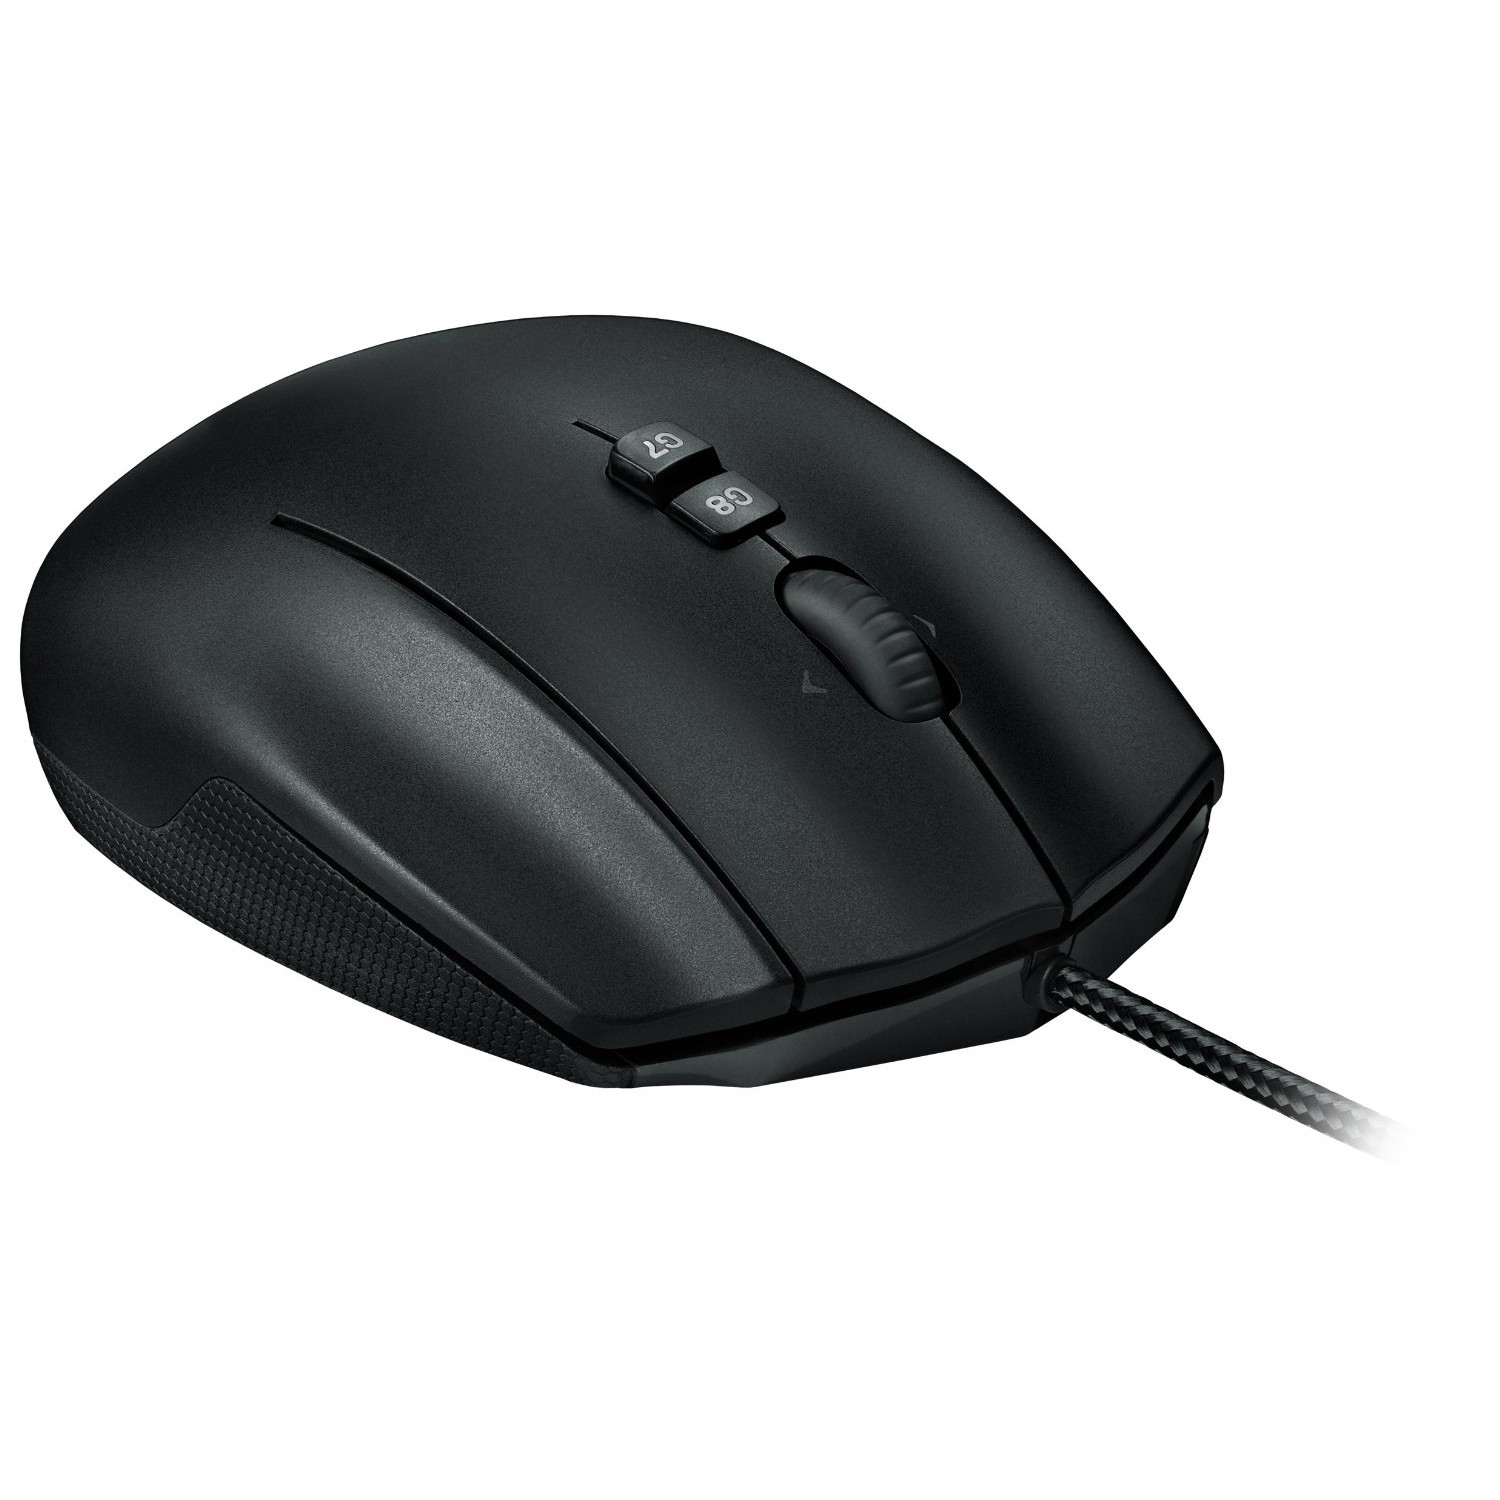 Logitech G600 MMO Black Gaming Mouse-7